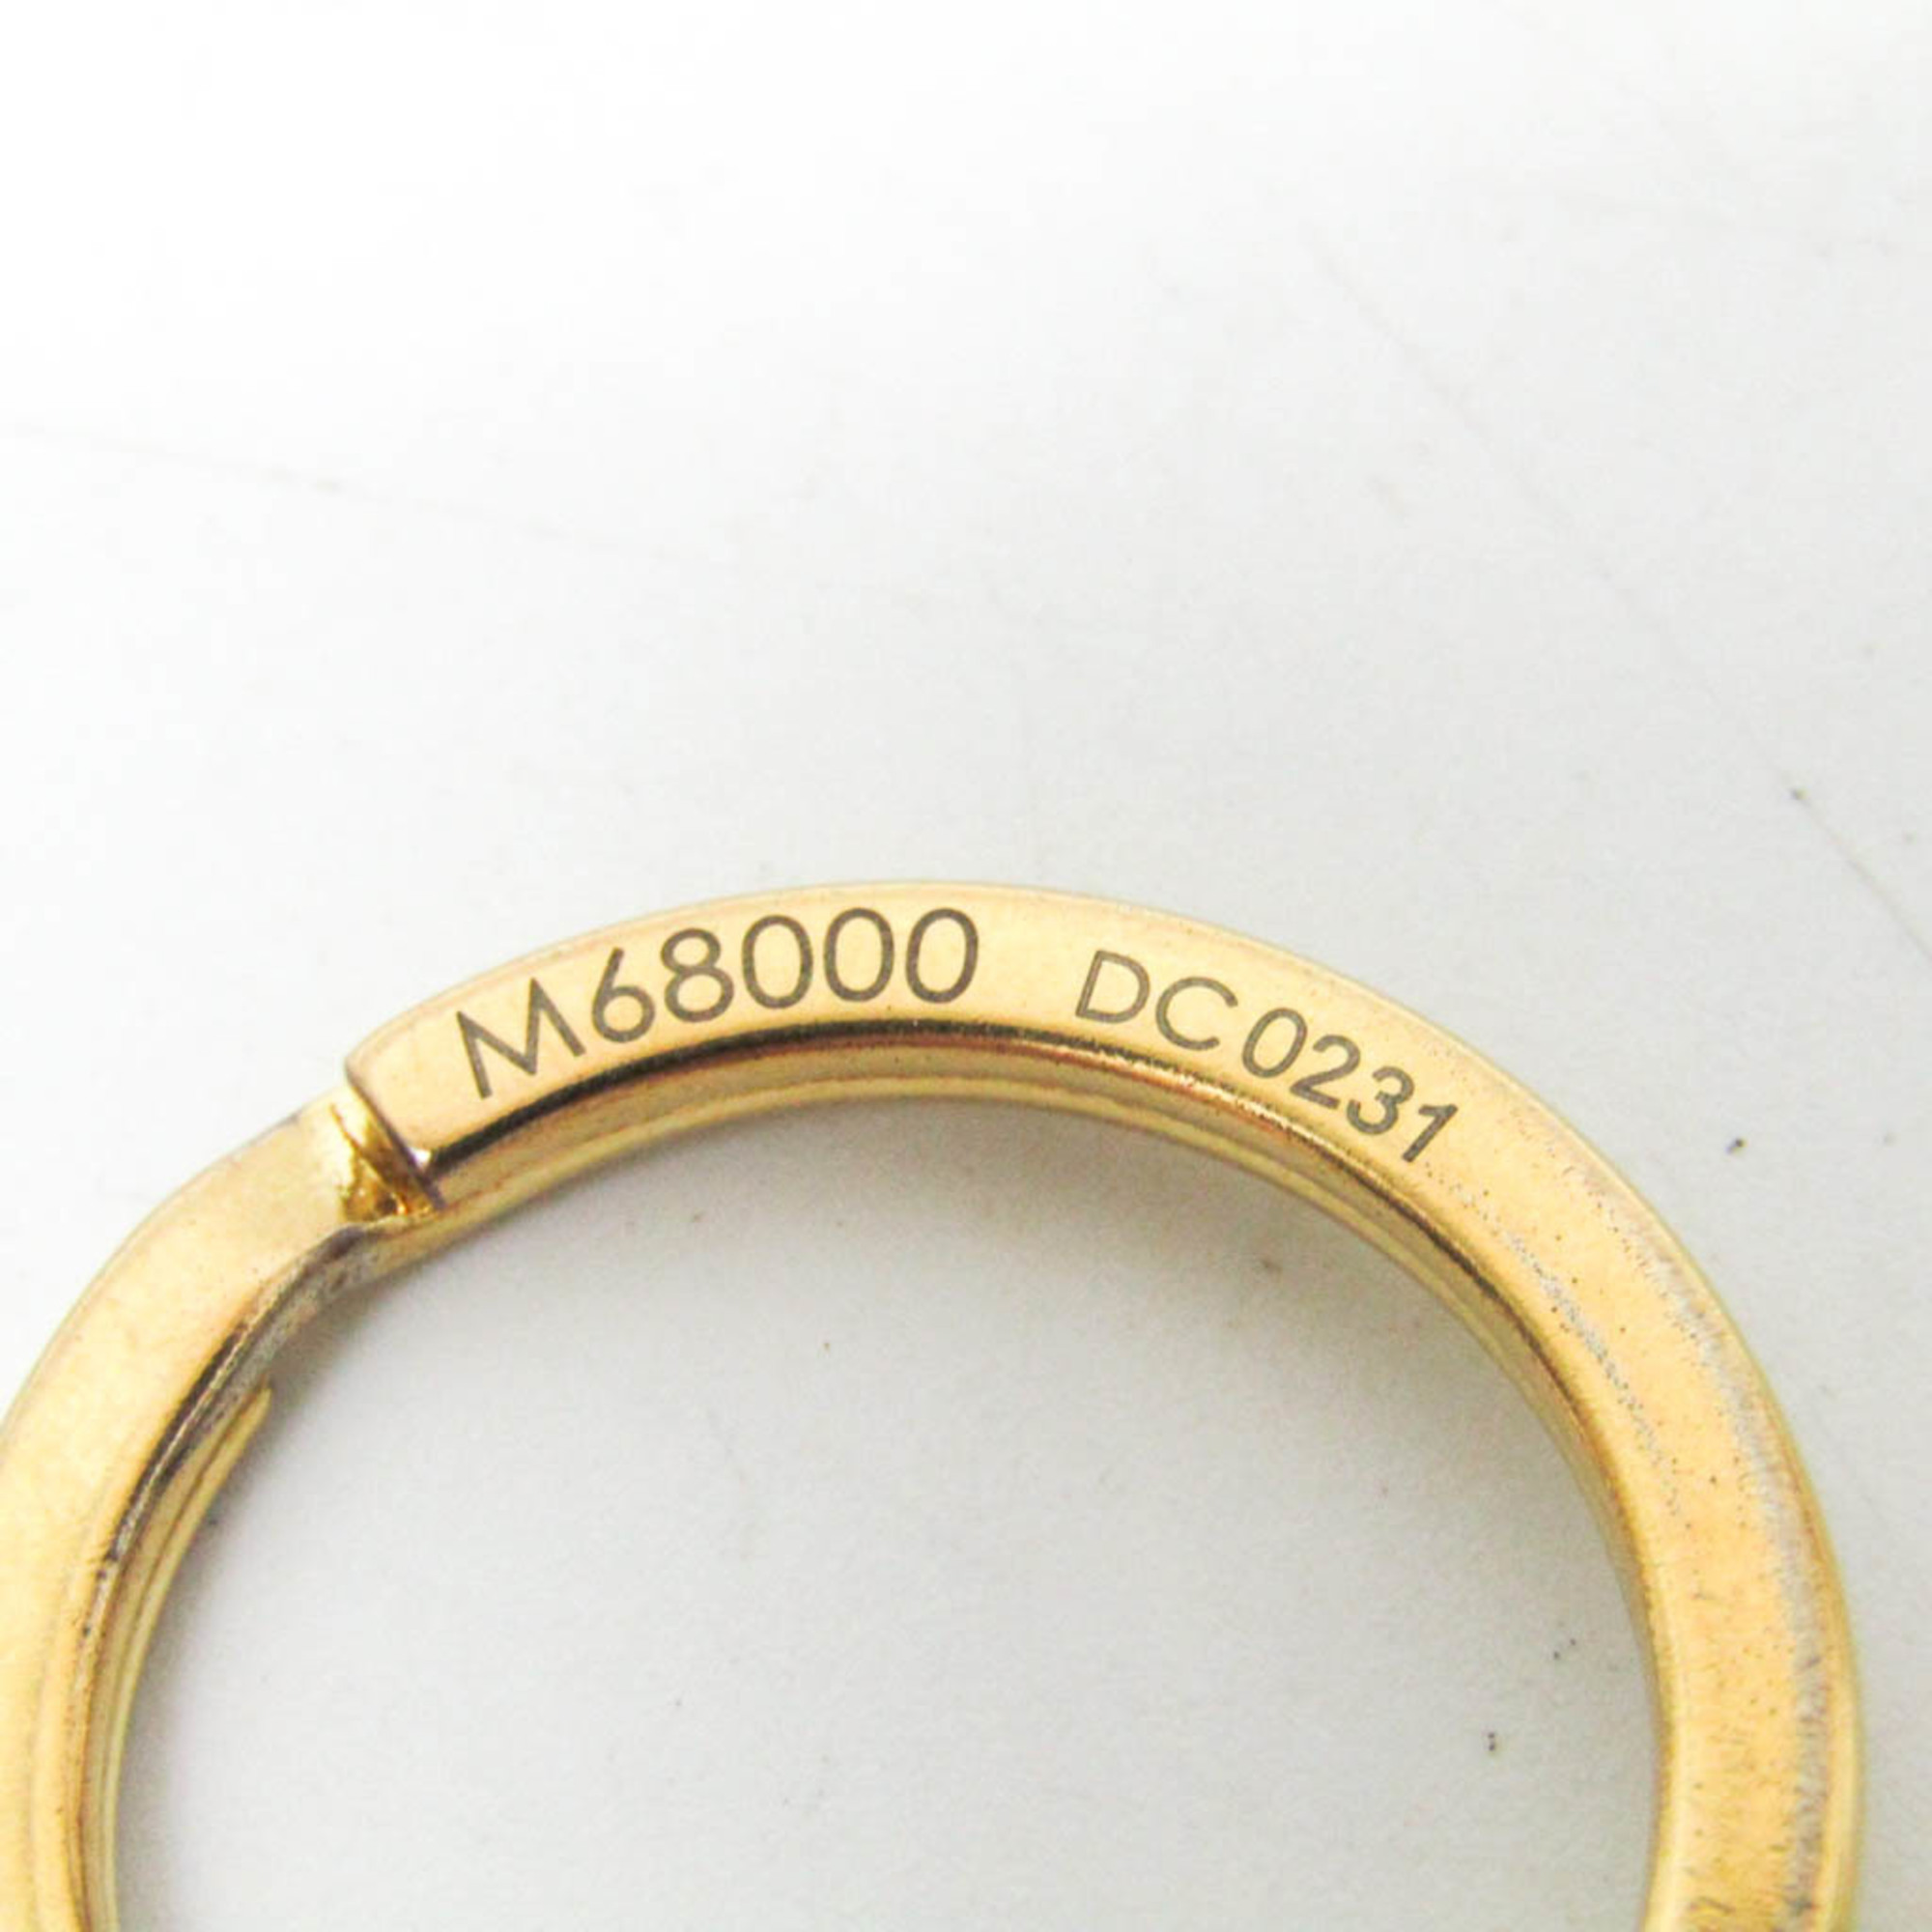 Louis Vuitton Bag Charm LV Circle M68000 Keyring (Gold)